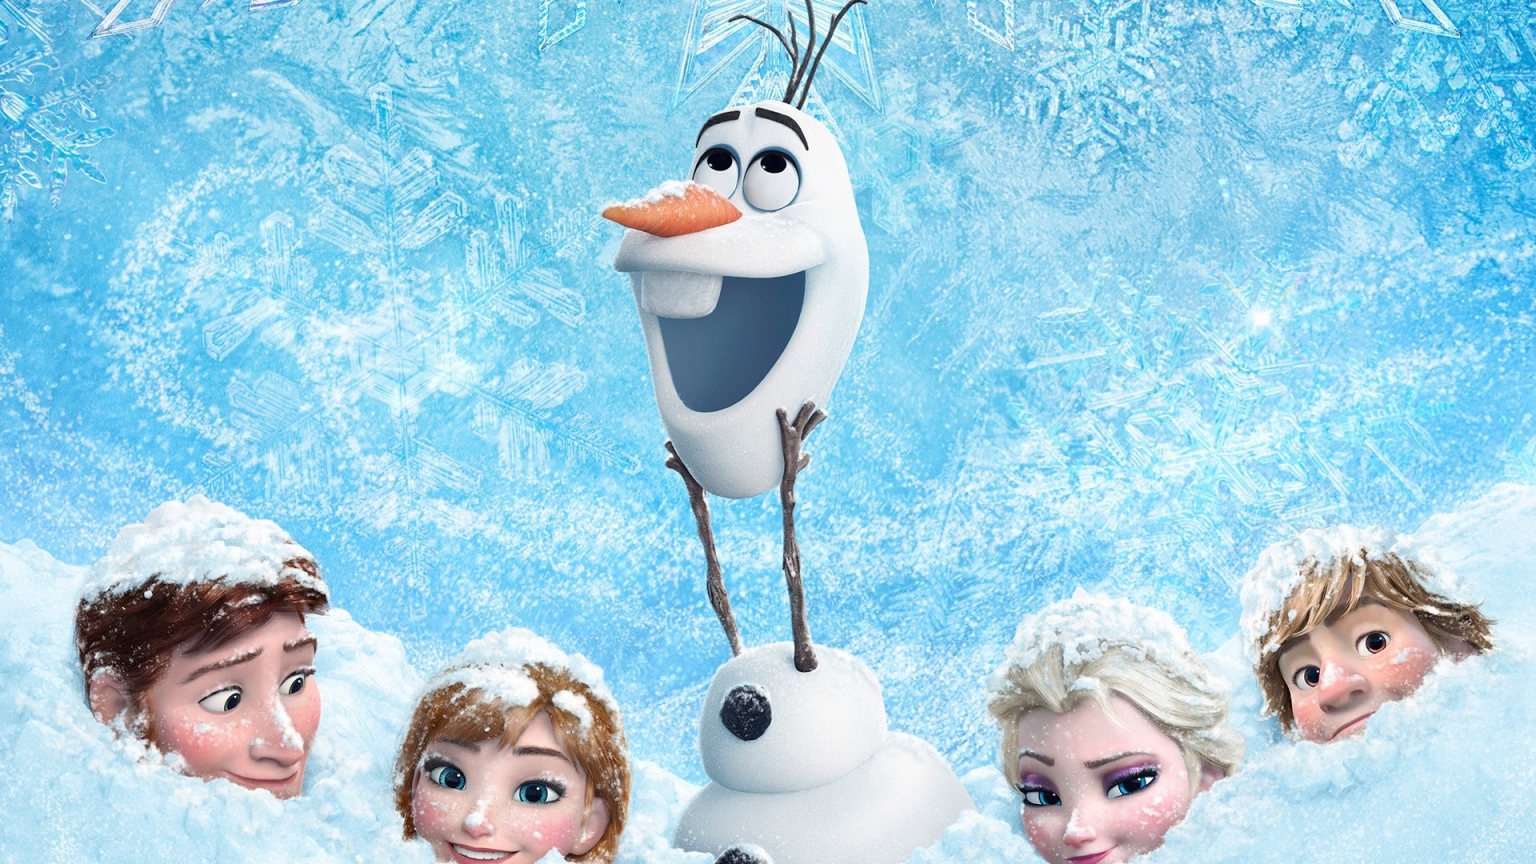 Frozen Animation for 1536 x 864 HDTV resolution